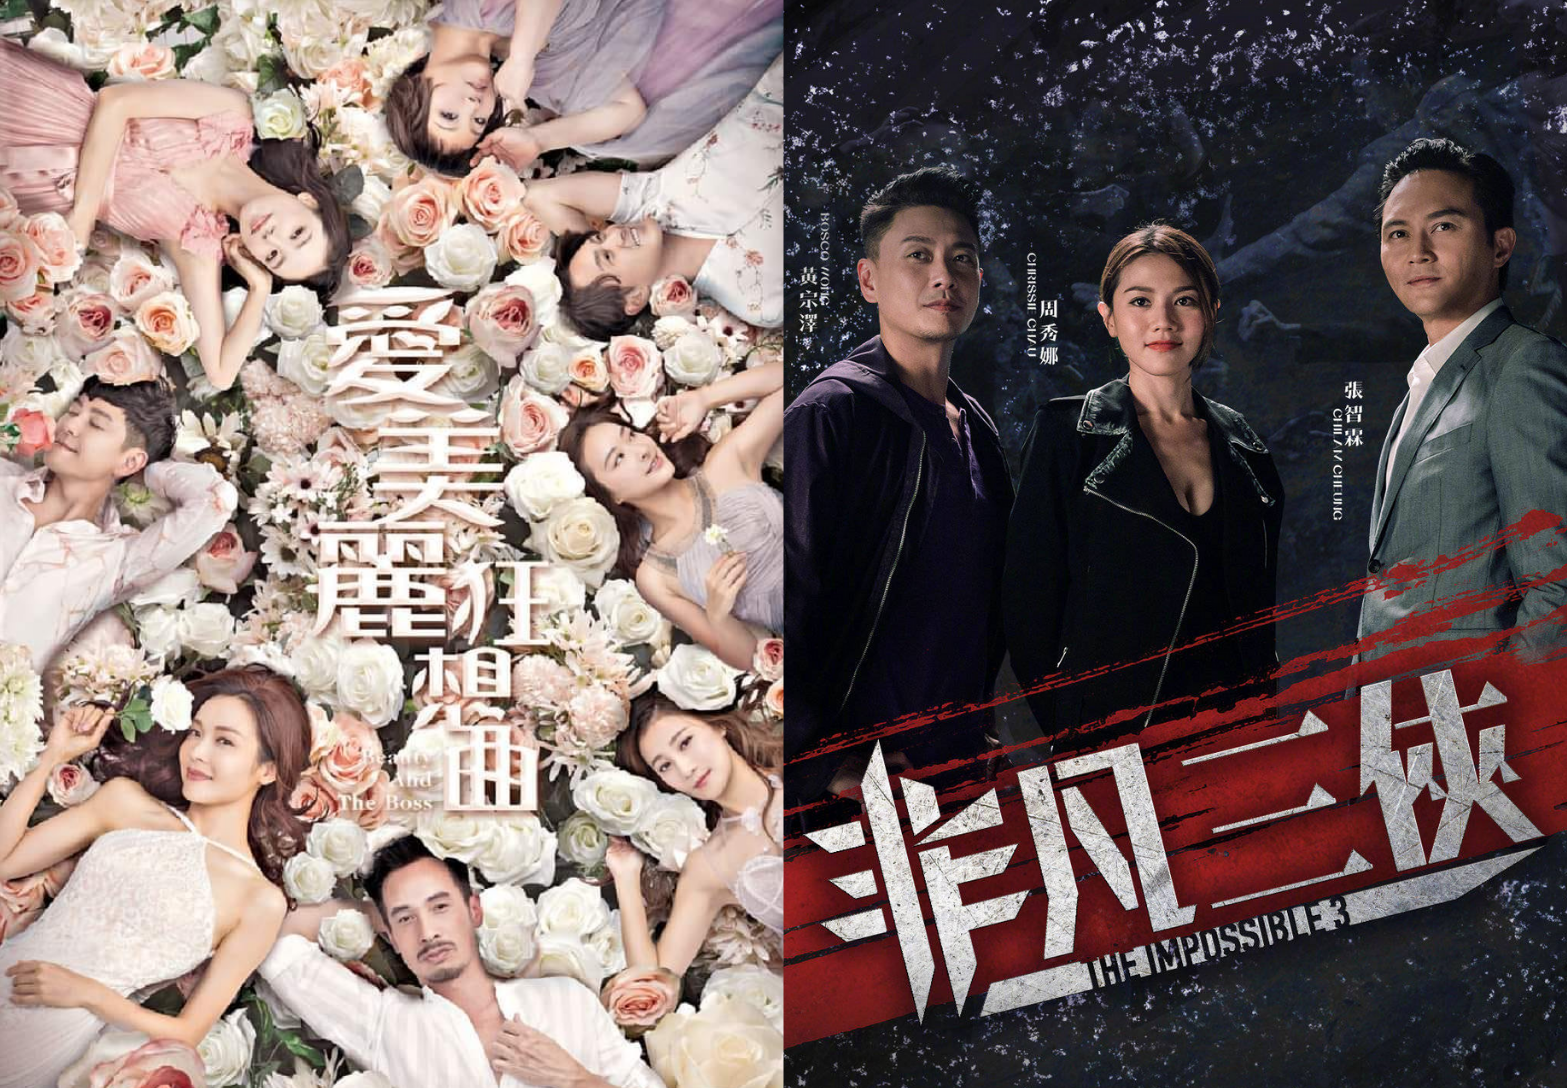 TVB Dramas premiering on Dec 2020.